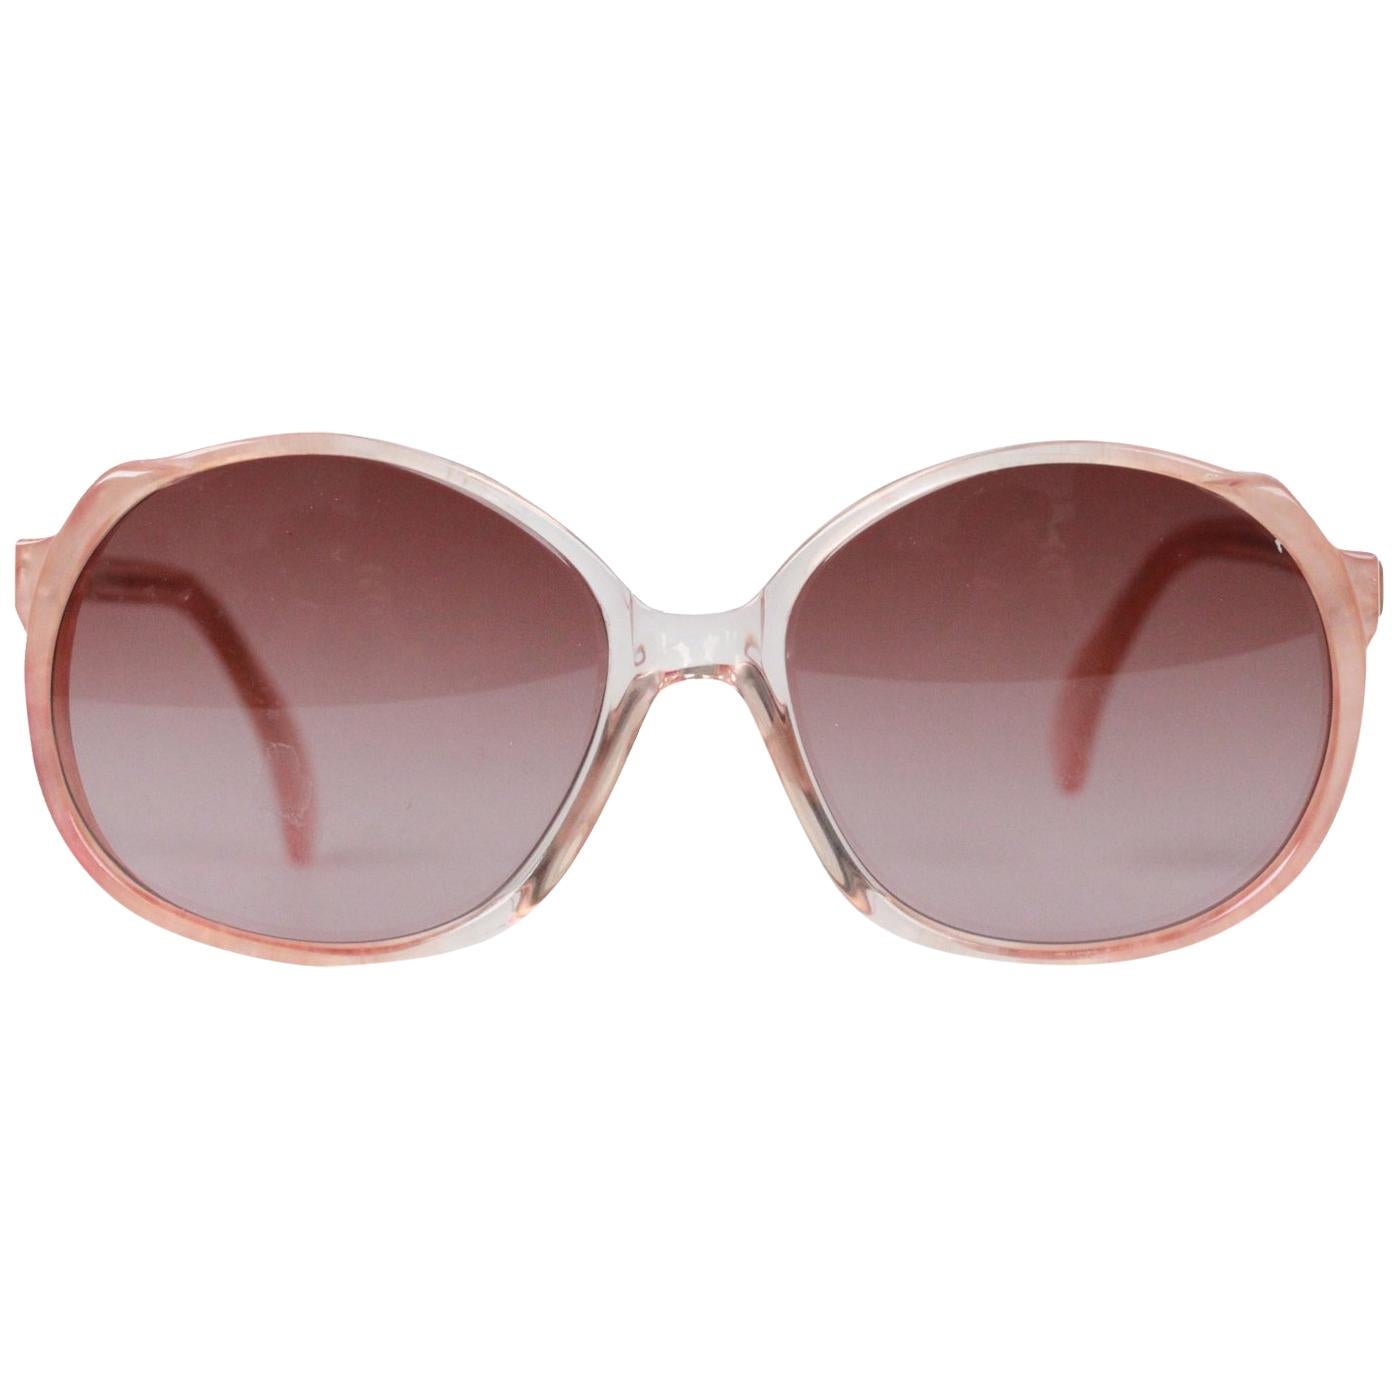 J Jourdan Paris Vintage Powder Pink Sunglasses 0C136 New Old Stock